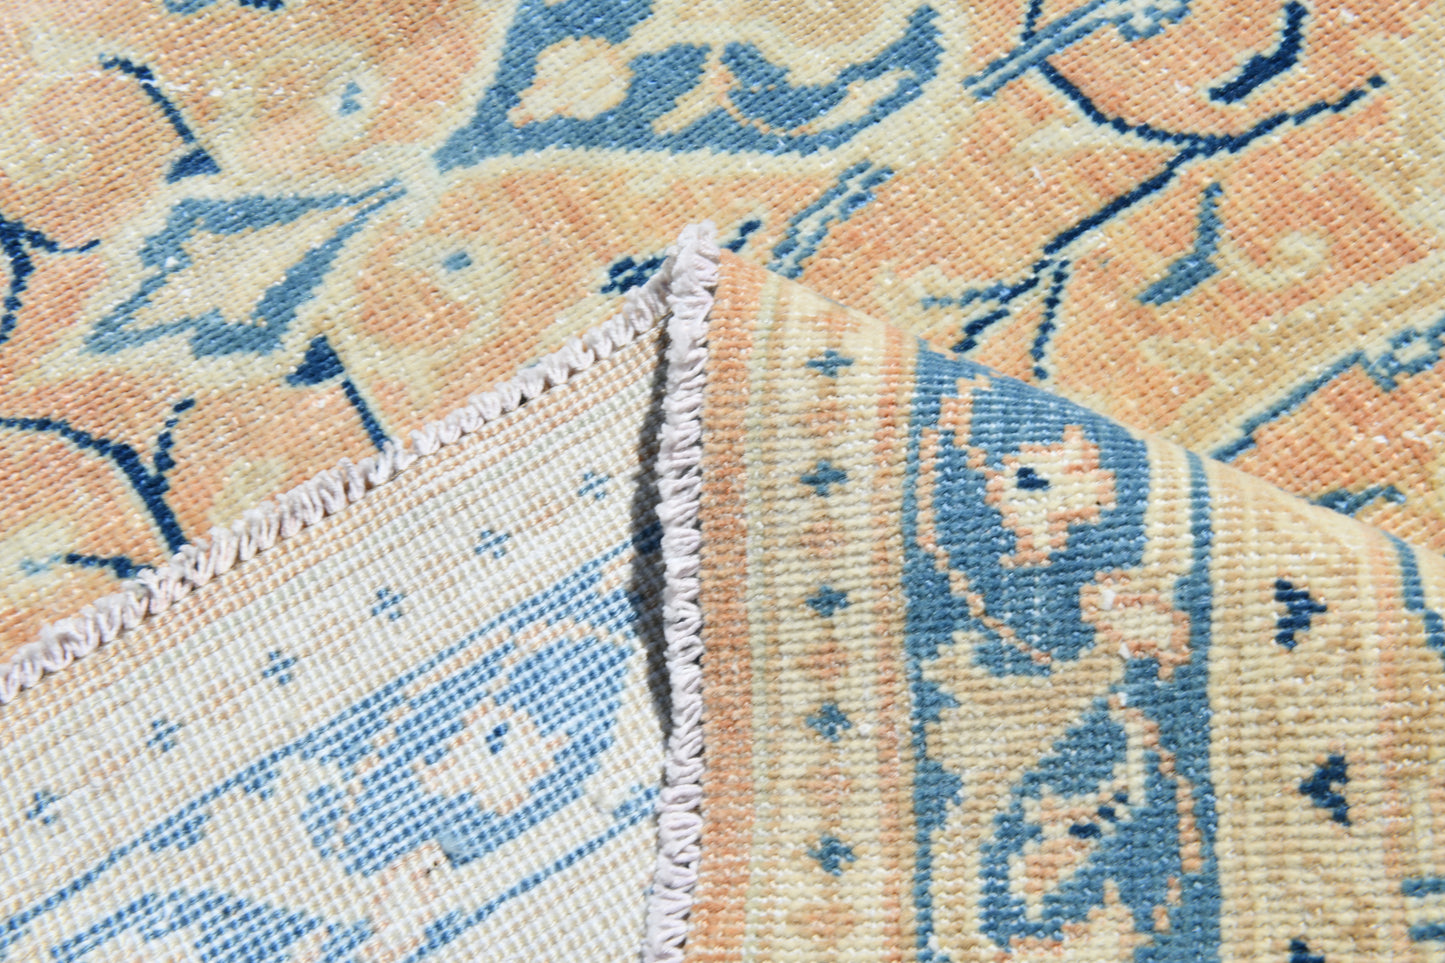 9'8" x 13'4" Vintage Persian Rug - 18877